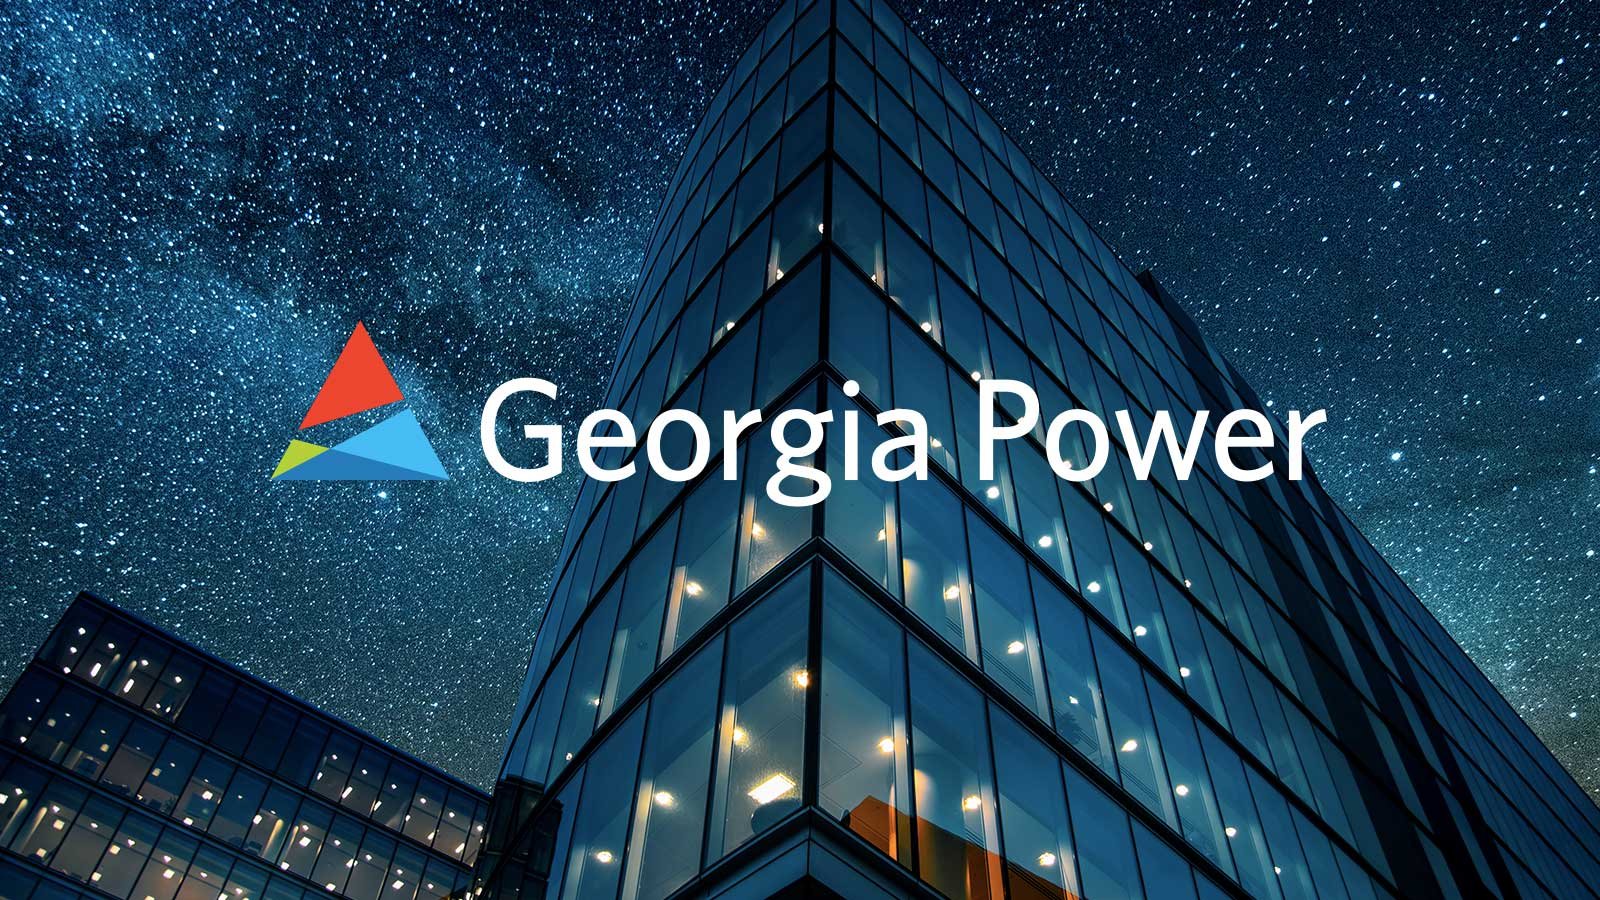 Georgia Power headquarters